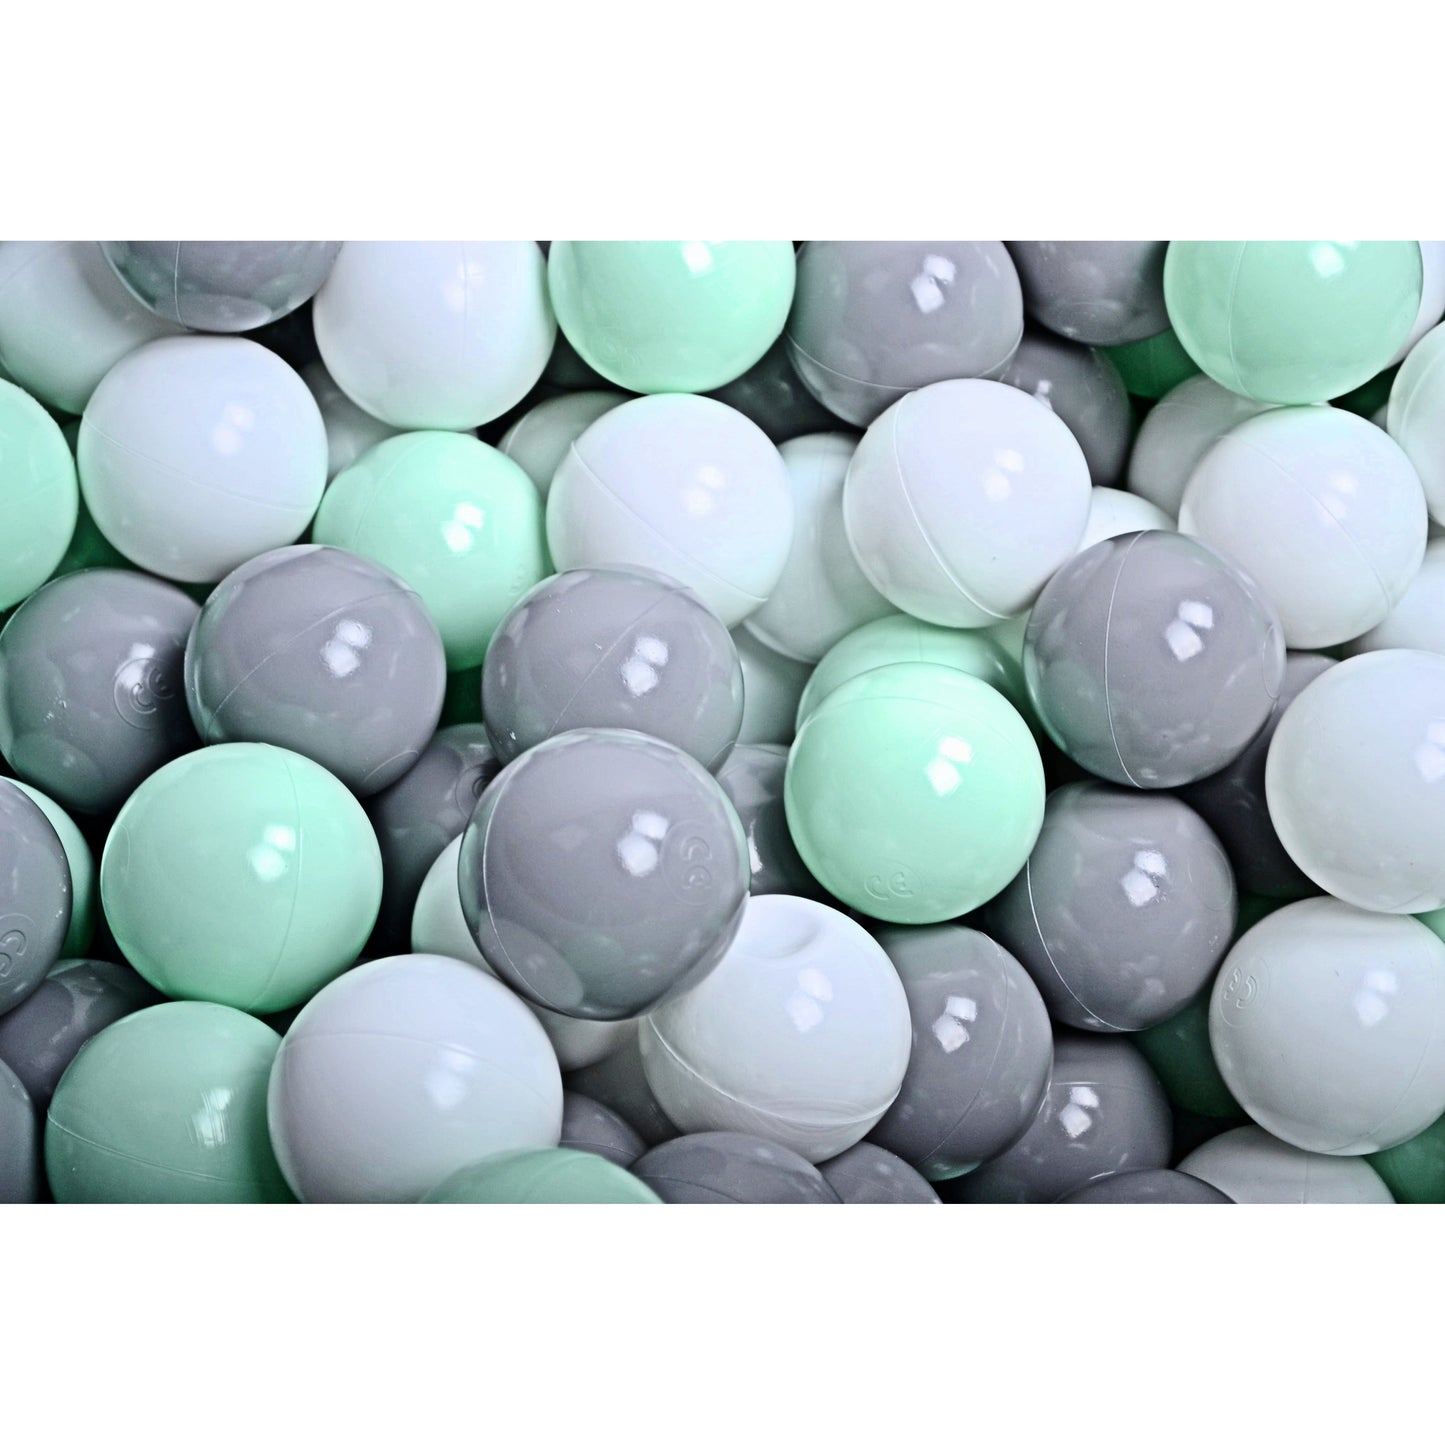 Velvet Corduroy Sand Round Foam Ball Pit - Select Your Own Balls